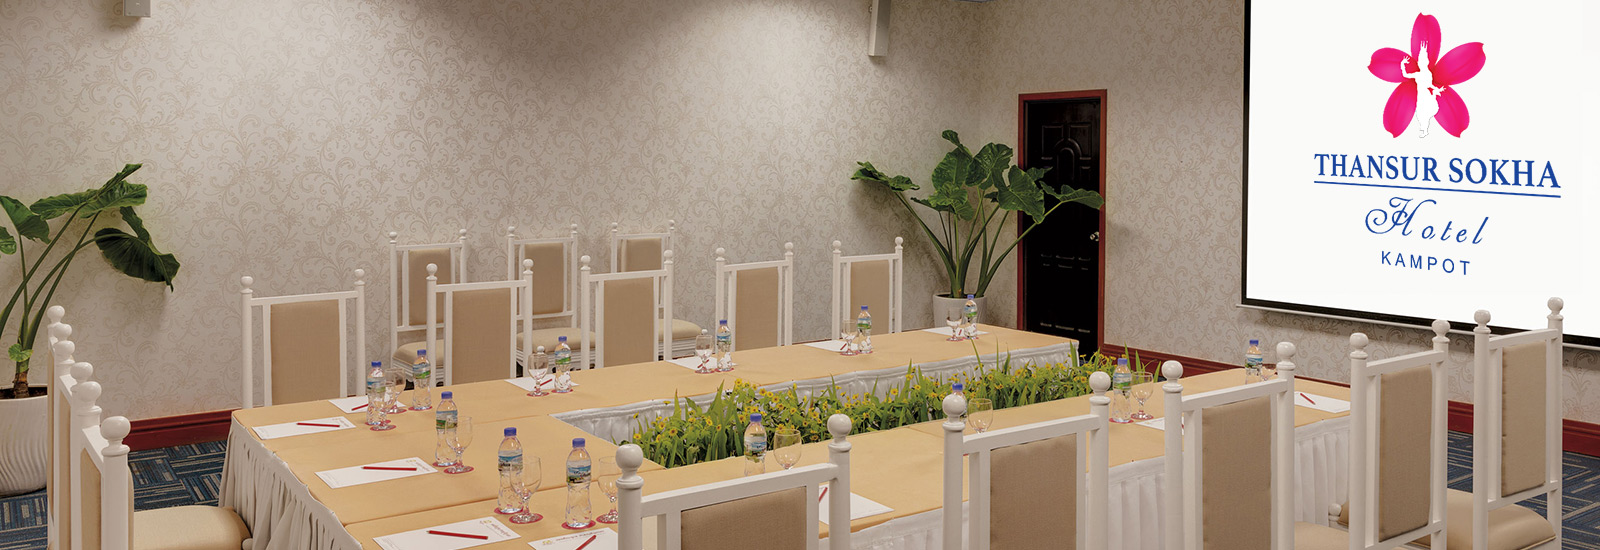 Bokor Meeting Room (Classroom Style)